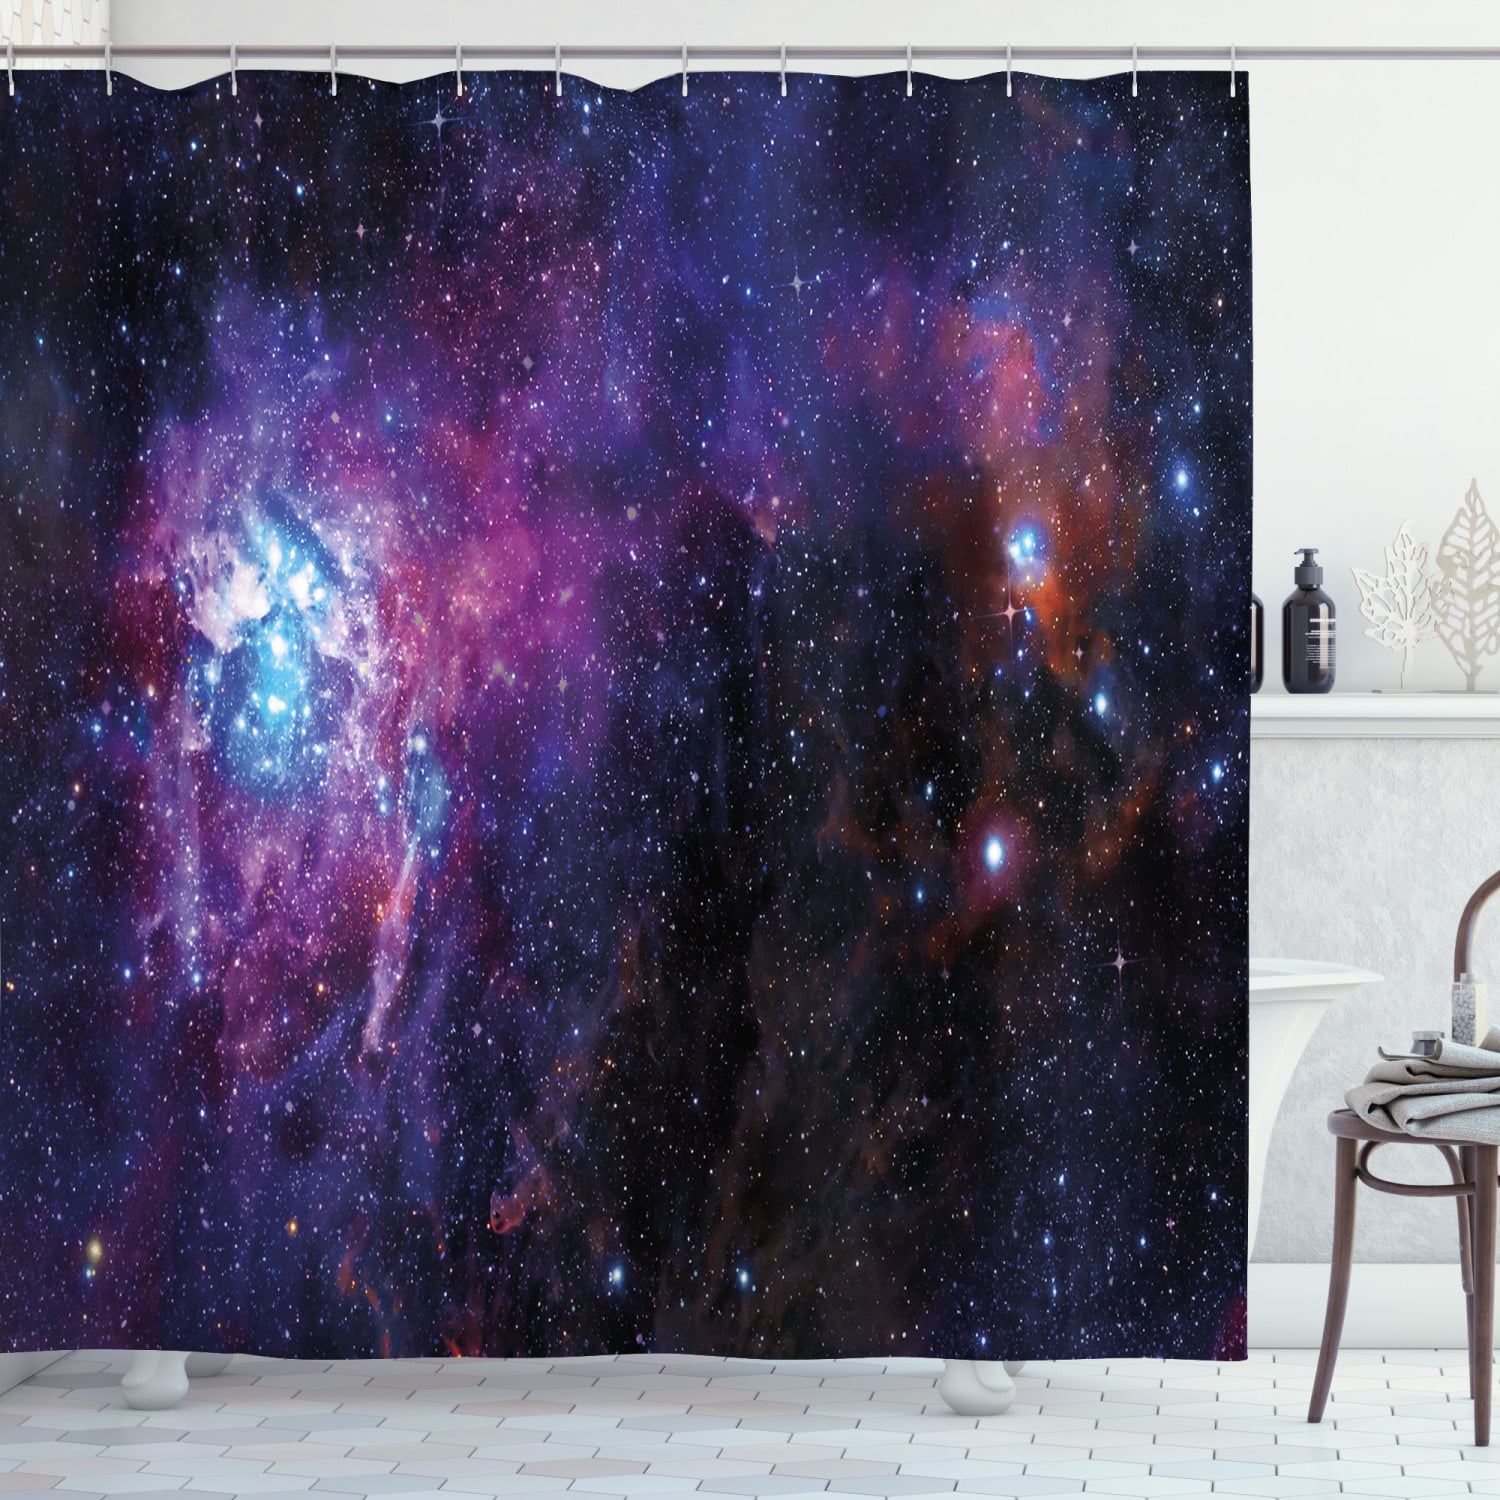 Fabric Shower Curtain & Hooks Rare Snow Mountain Nebula View Bathroom Waterproof 